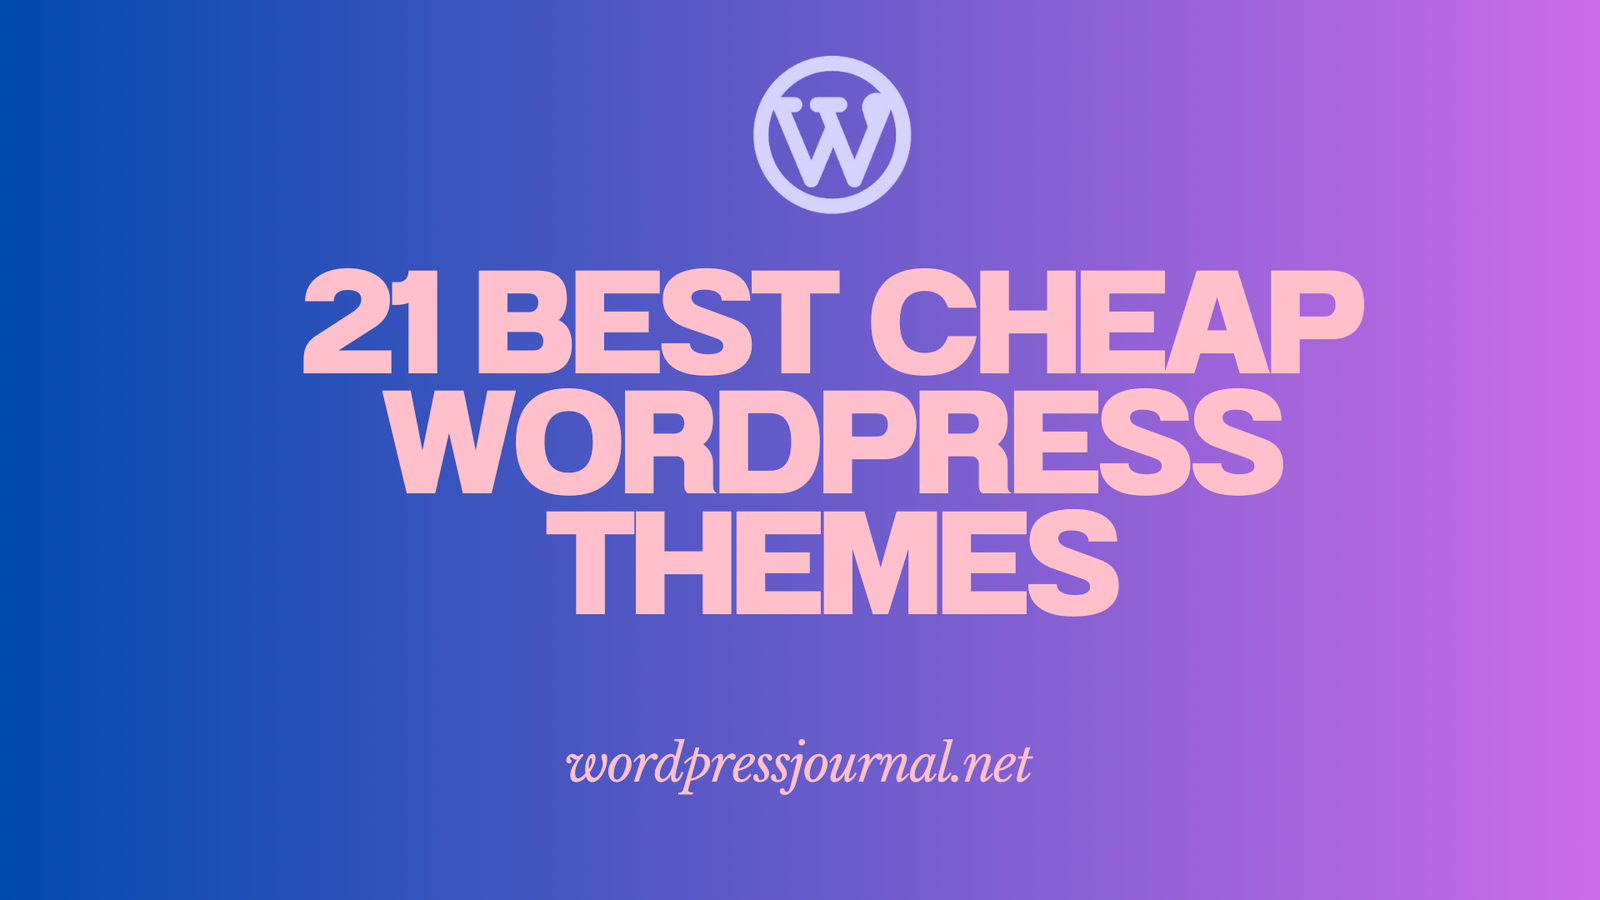 21 Best Cheap WordPress Themes